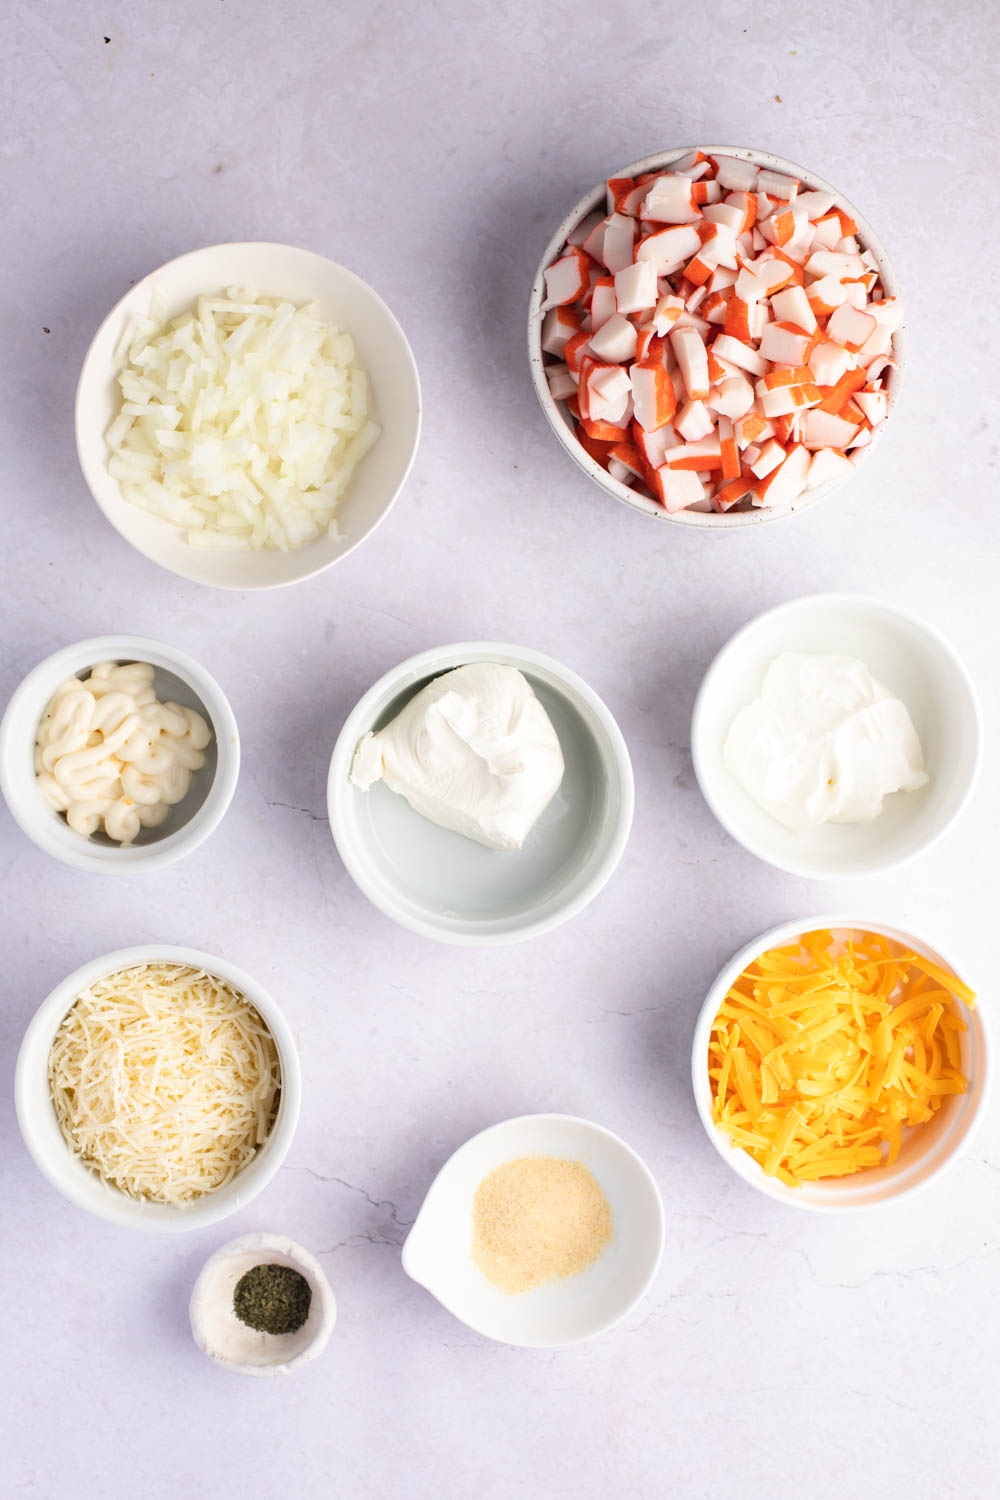 Crab Casserole Ingredients - Imitation Crab, Onion, Mayonnaise, Cheese, Garlic, Powder and Parsley